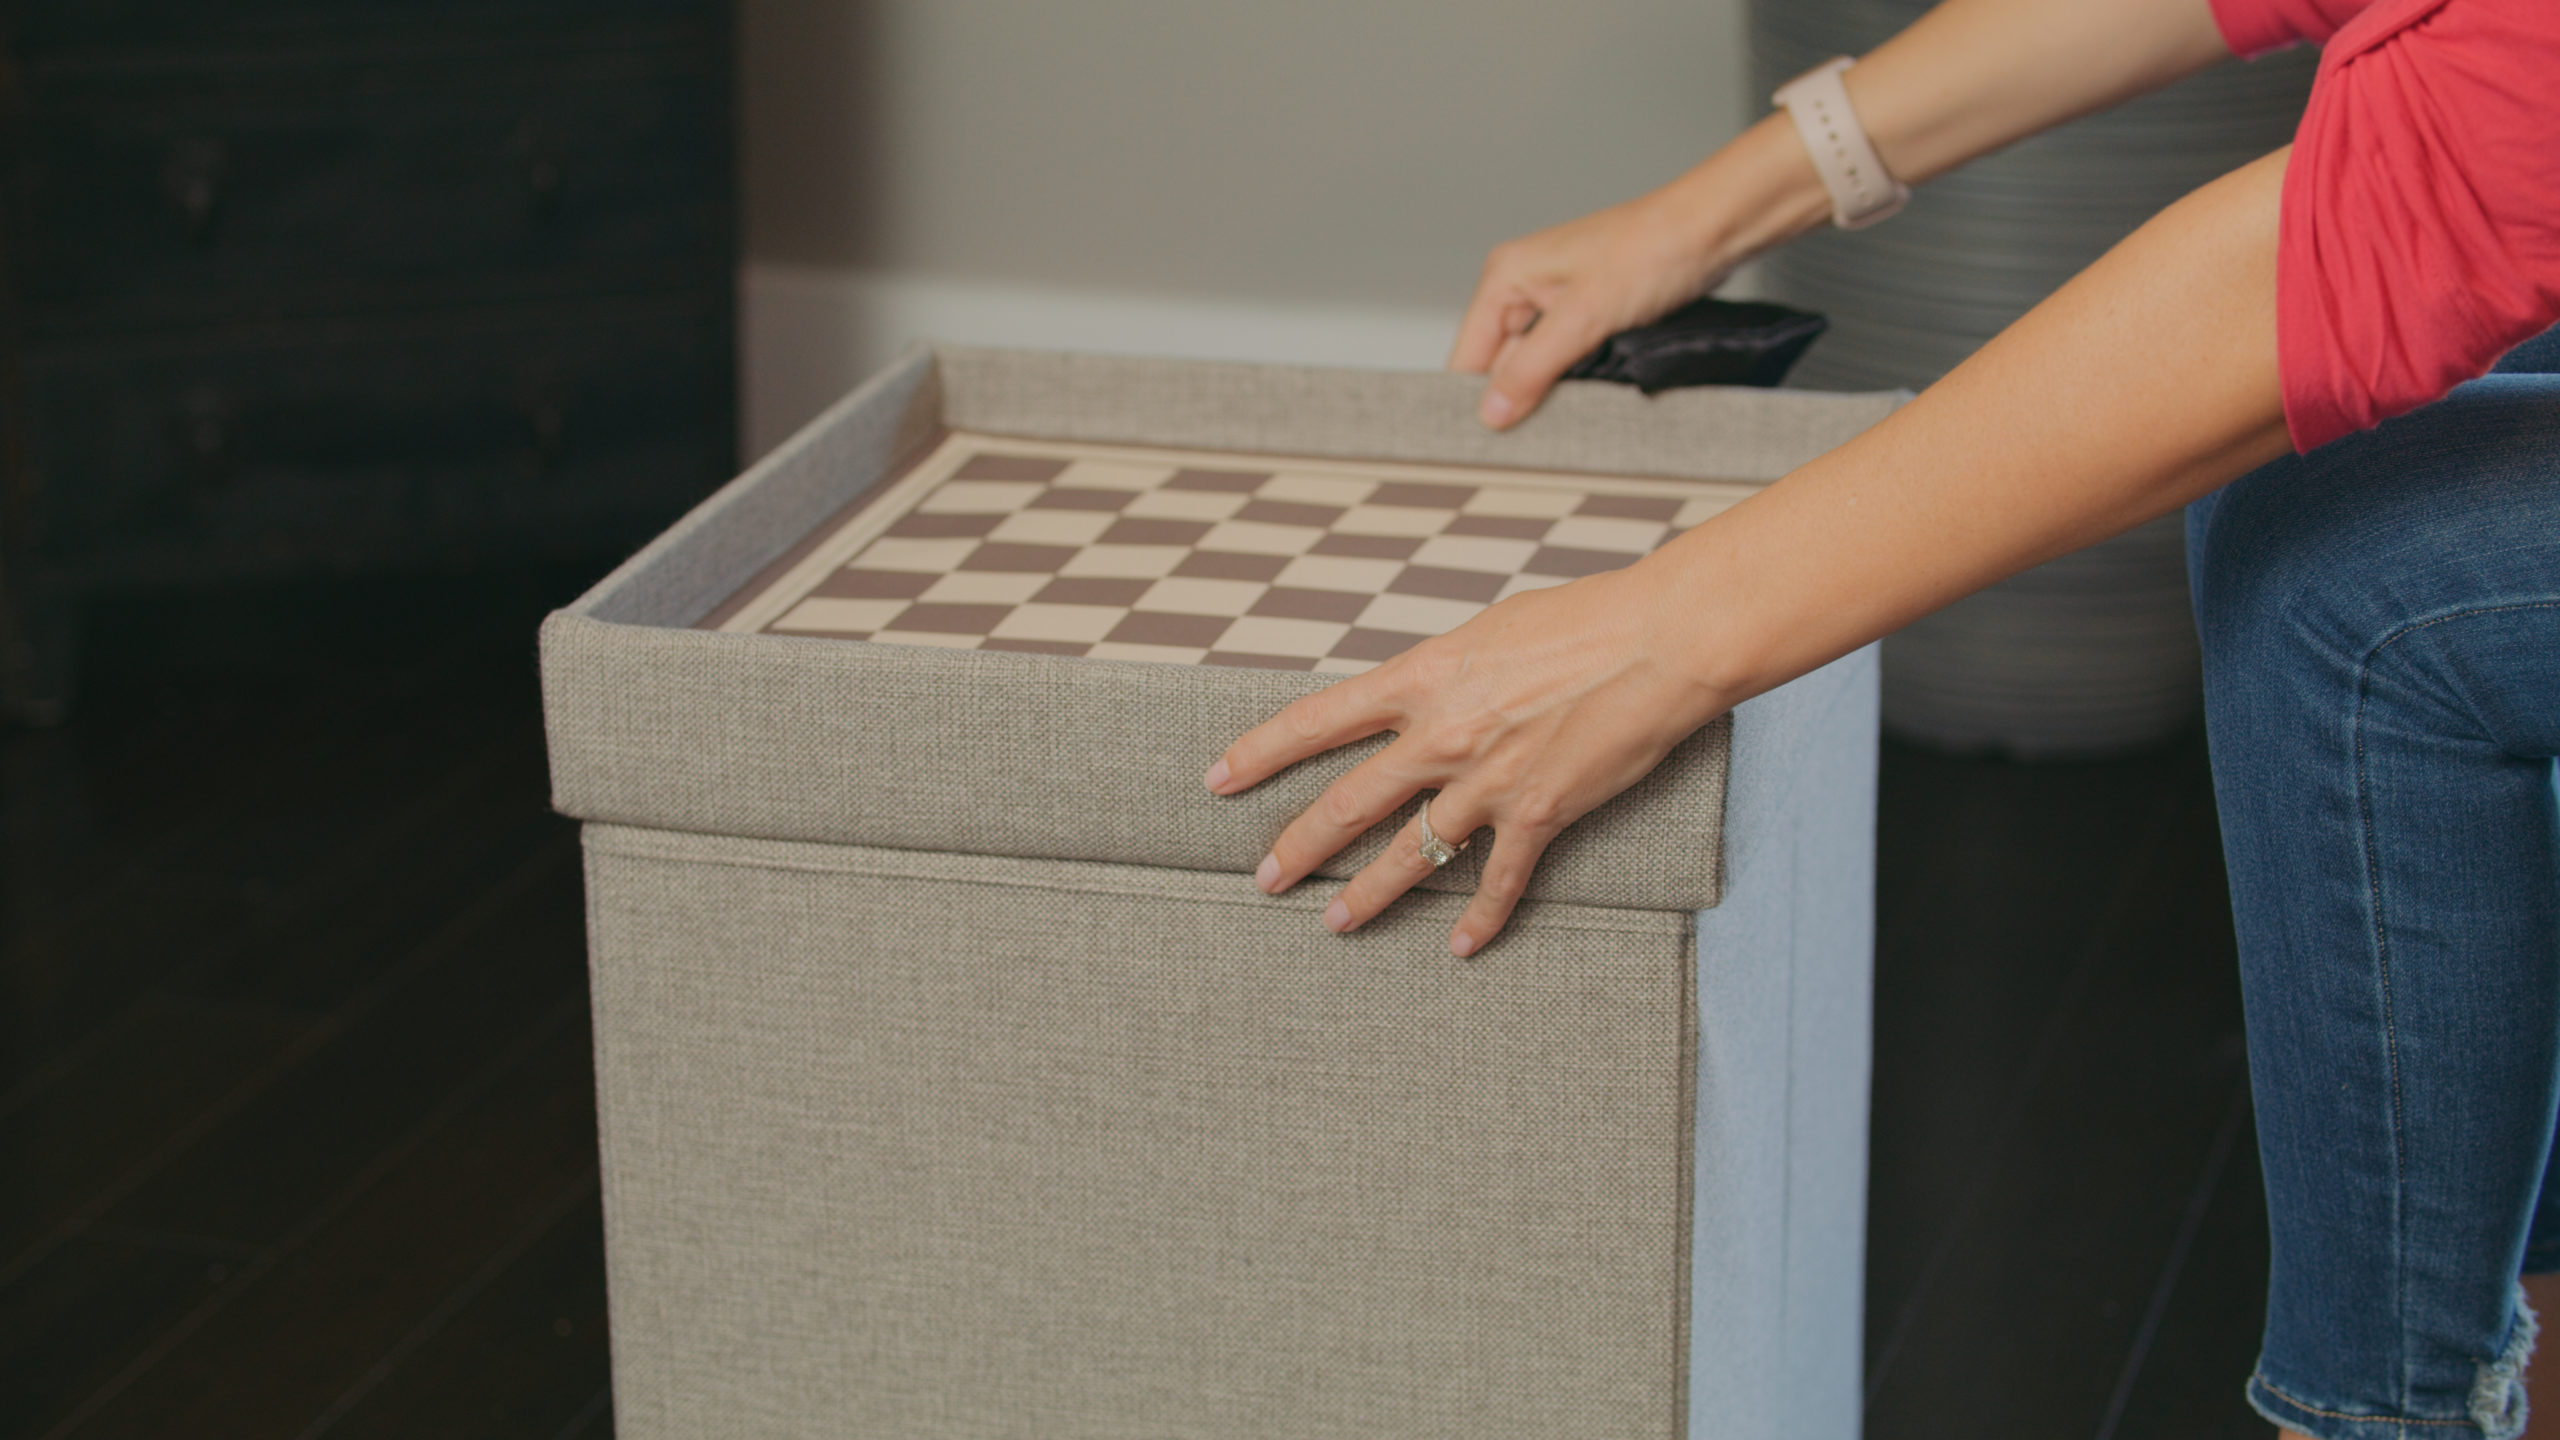 Audy Global Enterprise Ottoman Woman setting up checkers board on a box